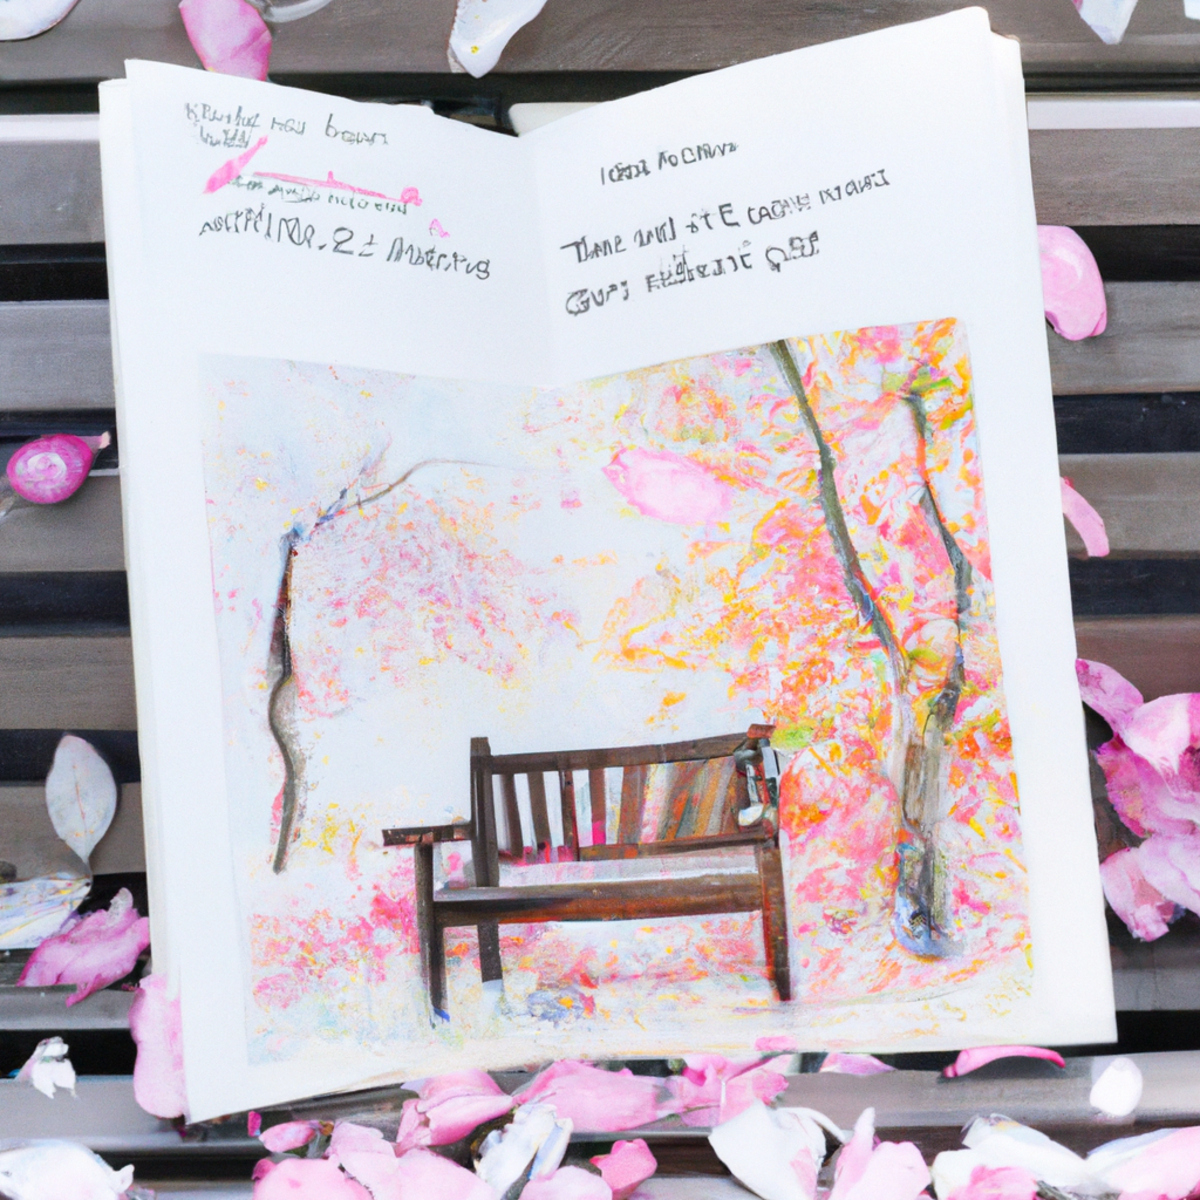 Serene park bench under cherry blossom tree with falling petals, open journal, steaming tea - symbolizing broken heart syndrome - Takotsubo Cardiomyopathy (Broken Heart Syndrome)